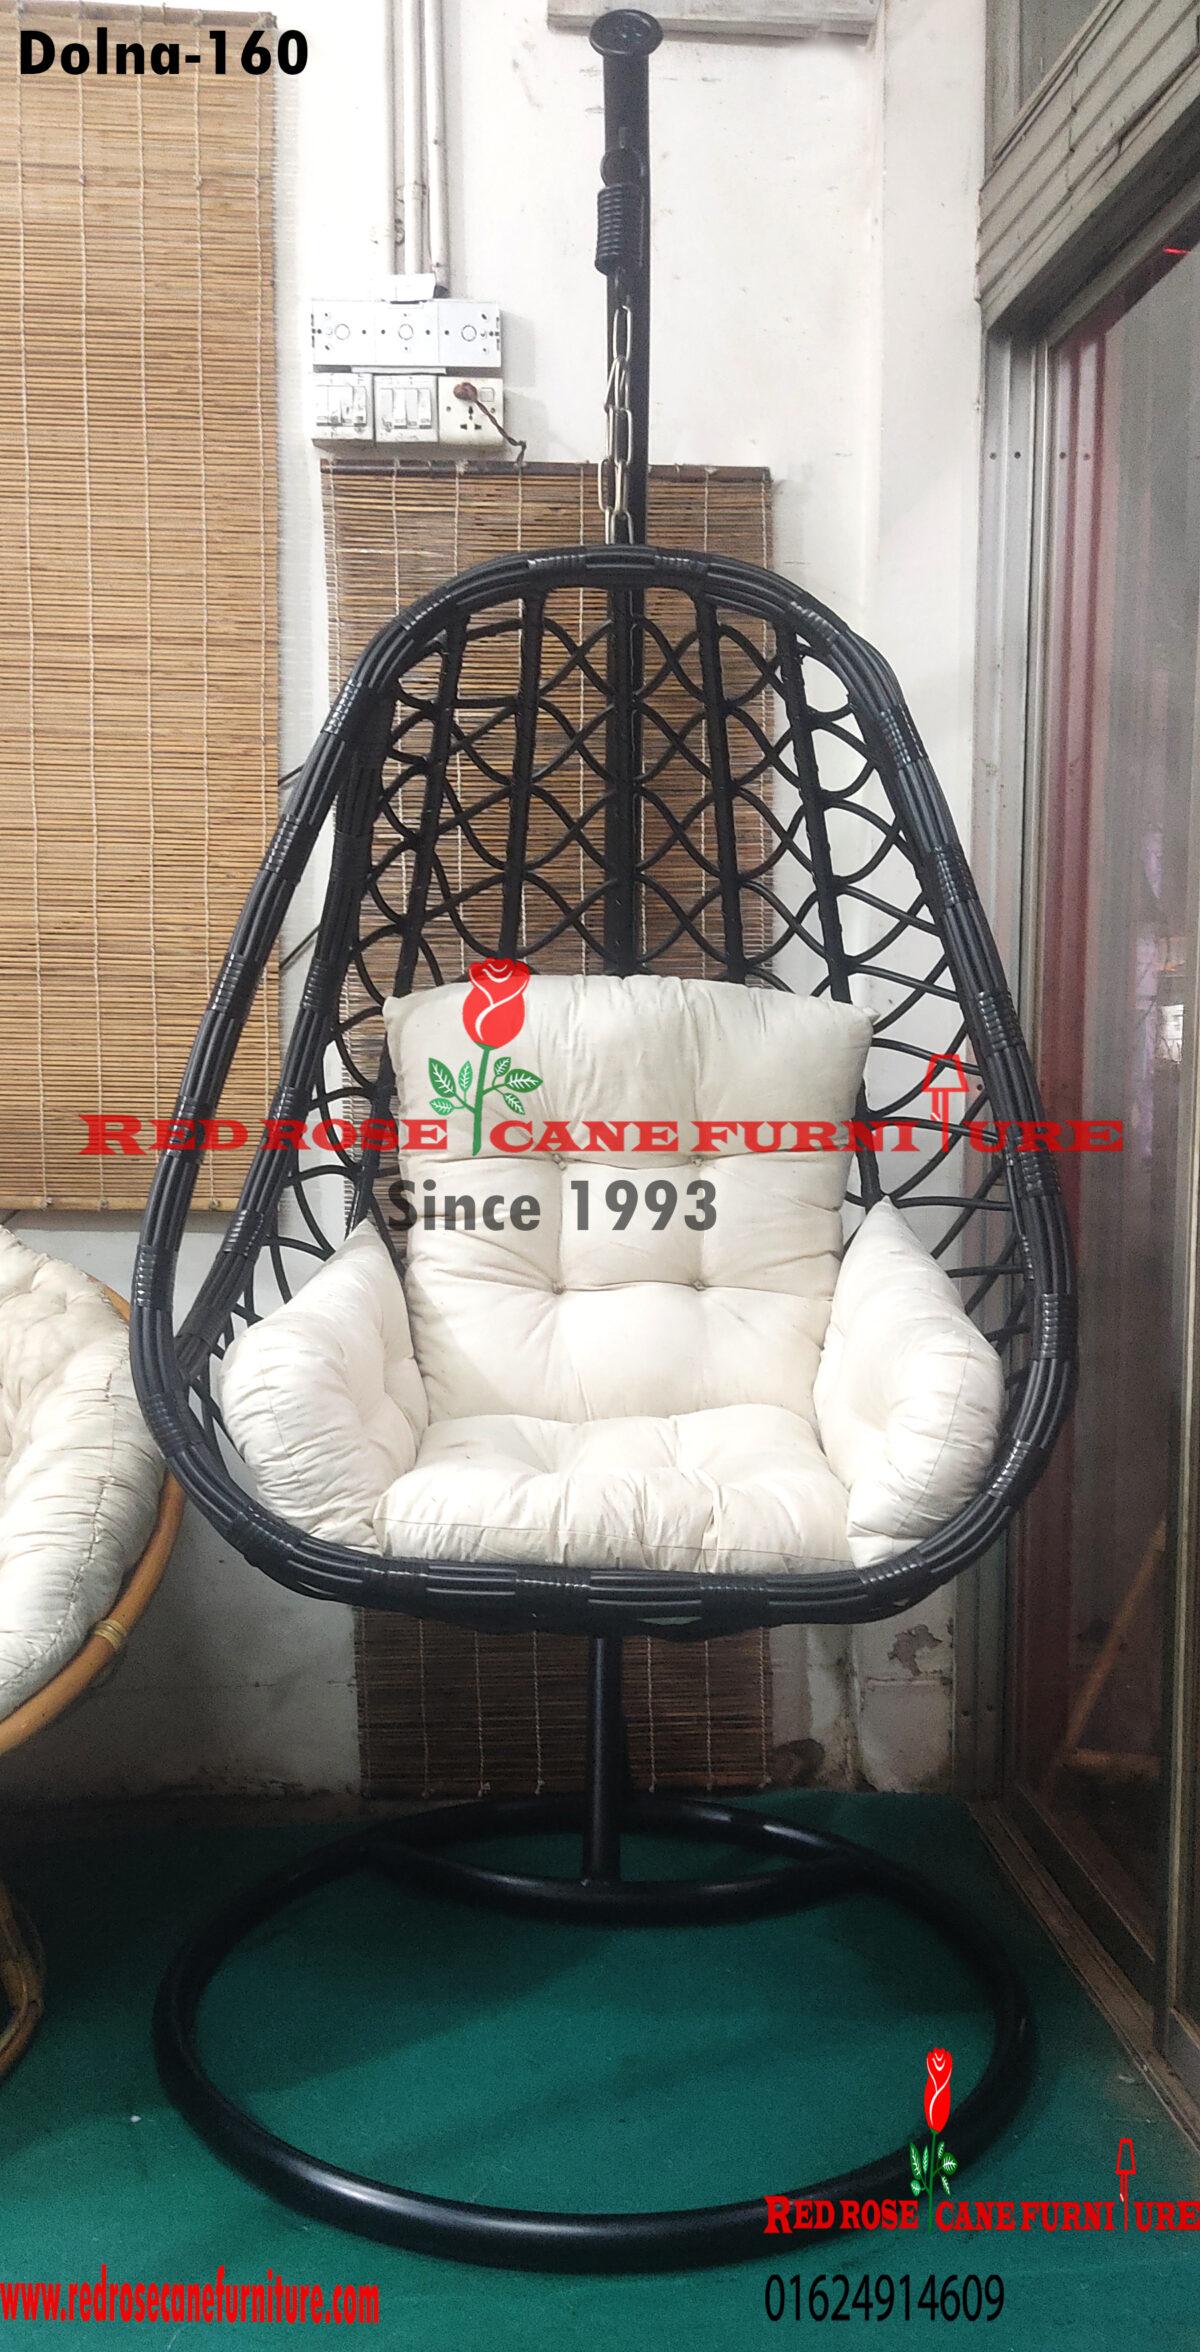 swing chair